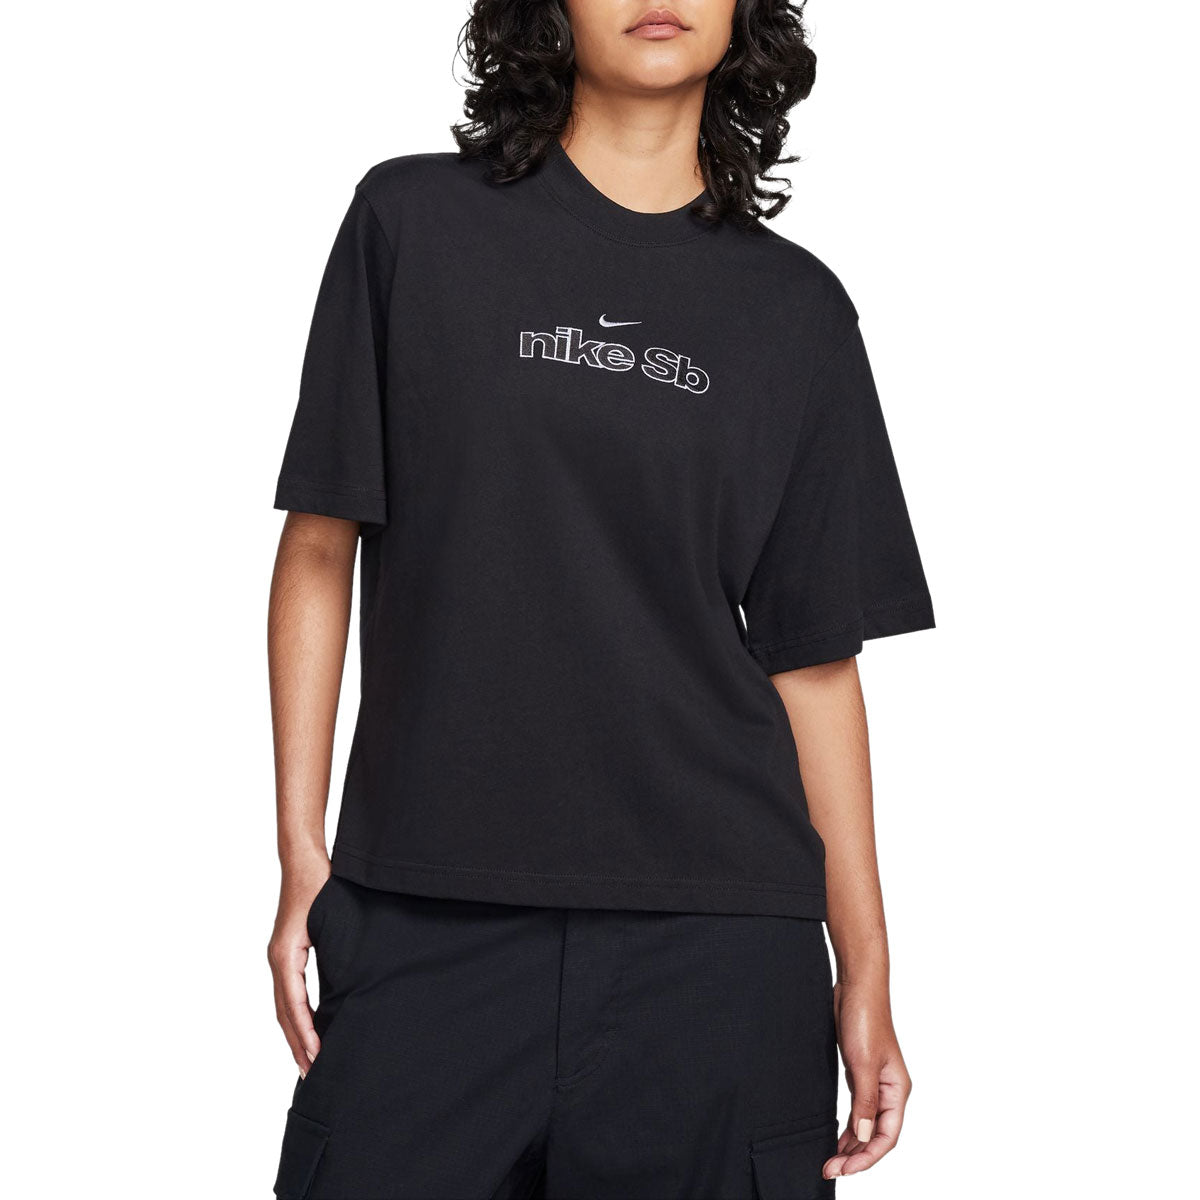 Nike SB Skate Outline T-Shirt - Black image 1